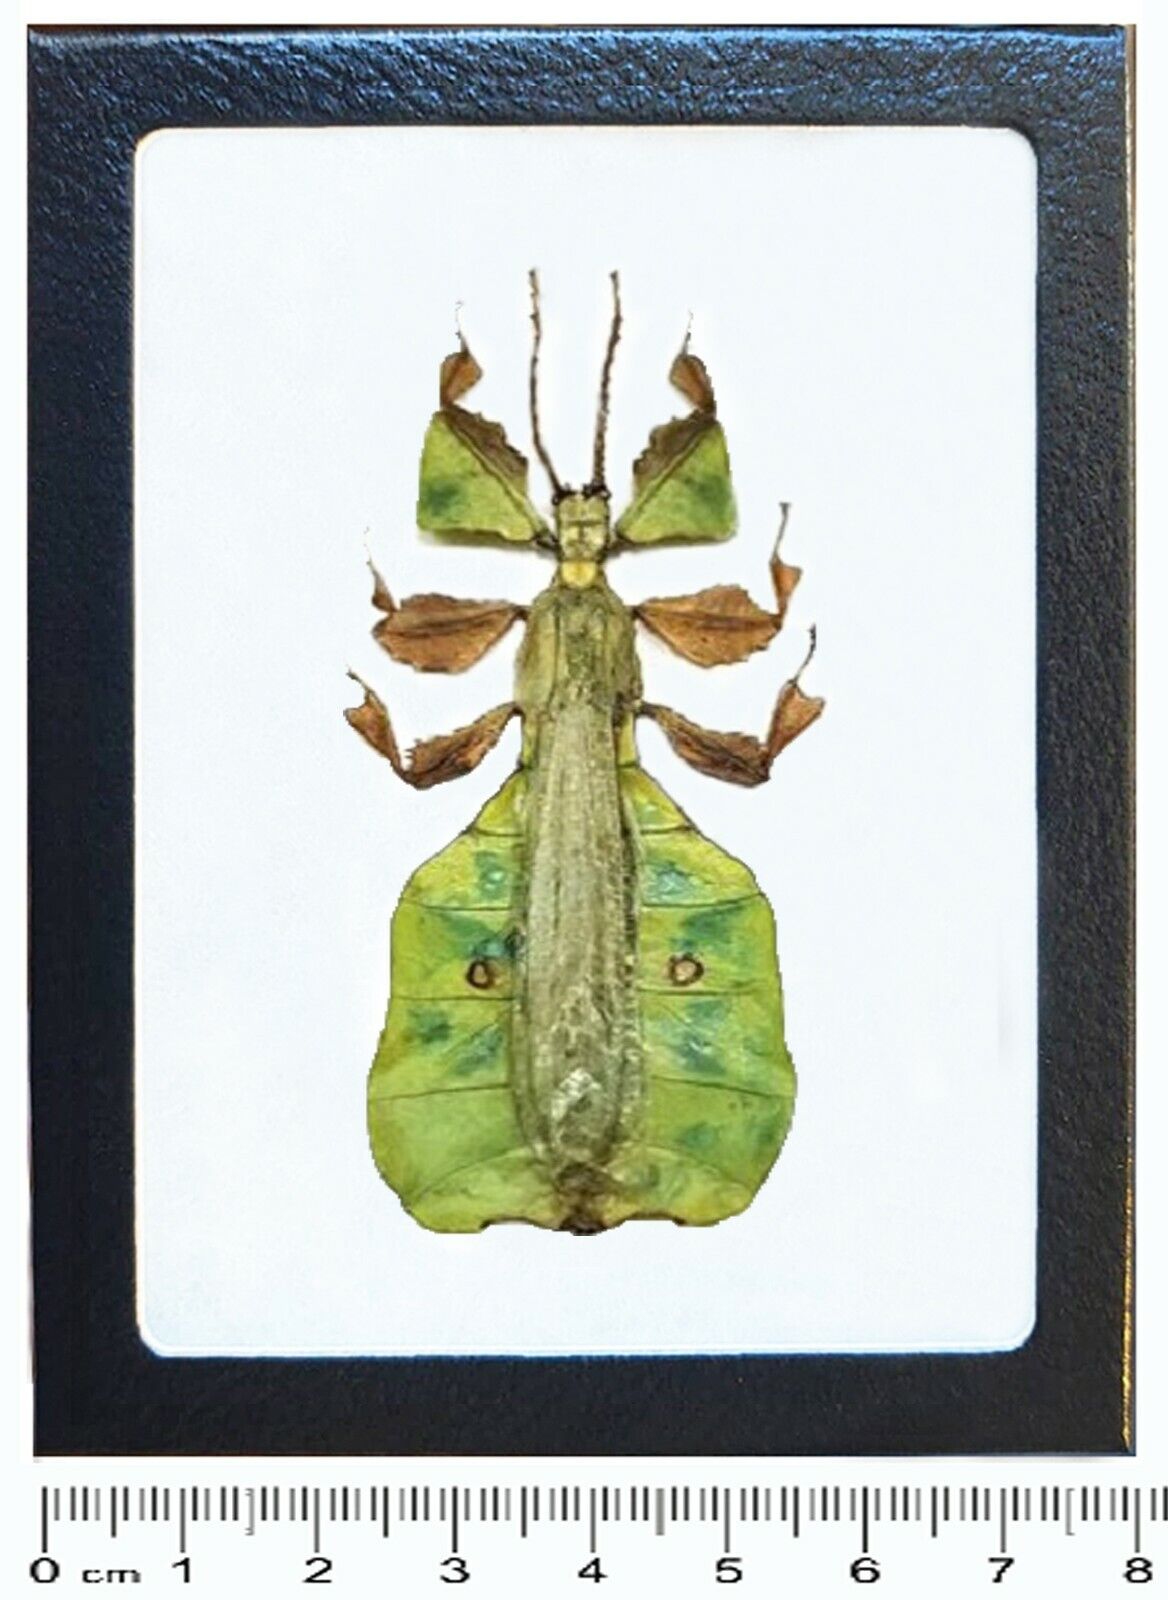 Phyllium pulchrifolium green leaf bug male Indonesia framed